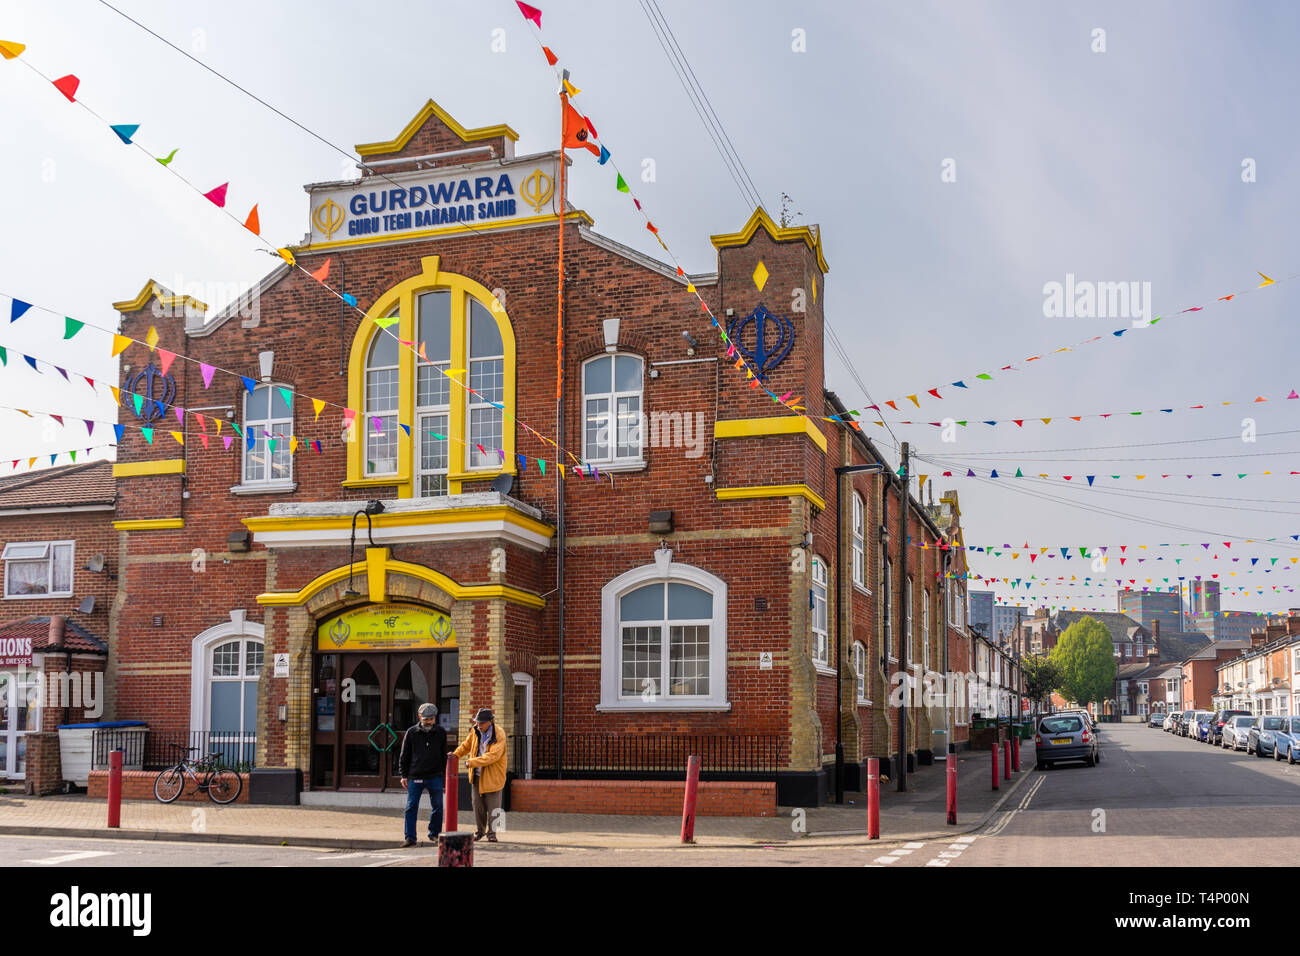 Gurdwara Guru Tegh Bahadar Sahib place of worship along St Marys Road in the district of Northam in Southampton, England, UK Stock Photo